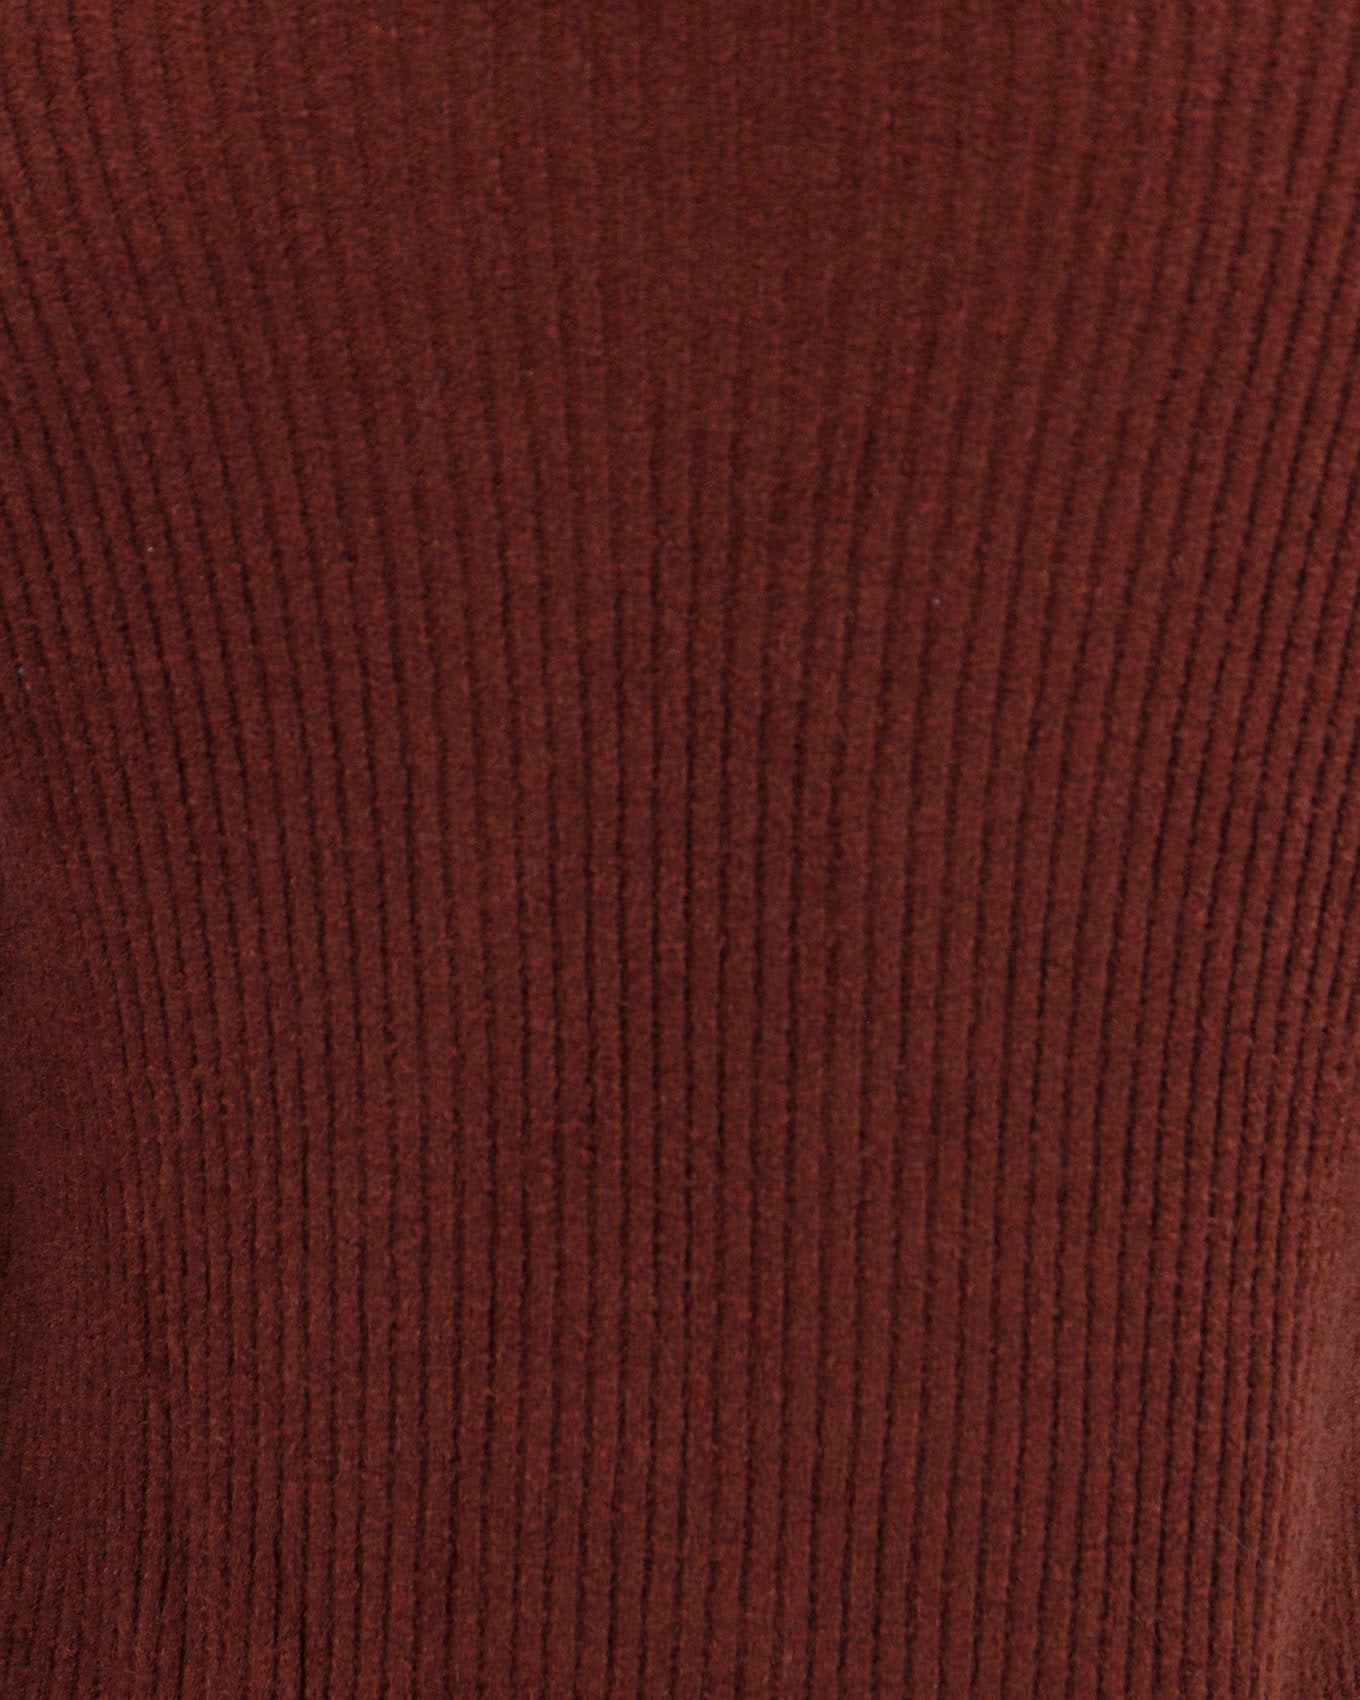 fabric view of cherry walnut bambu cowl neck cardigan